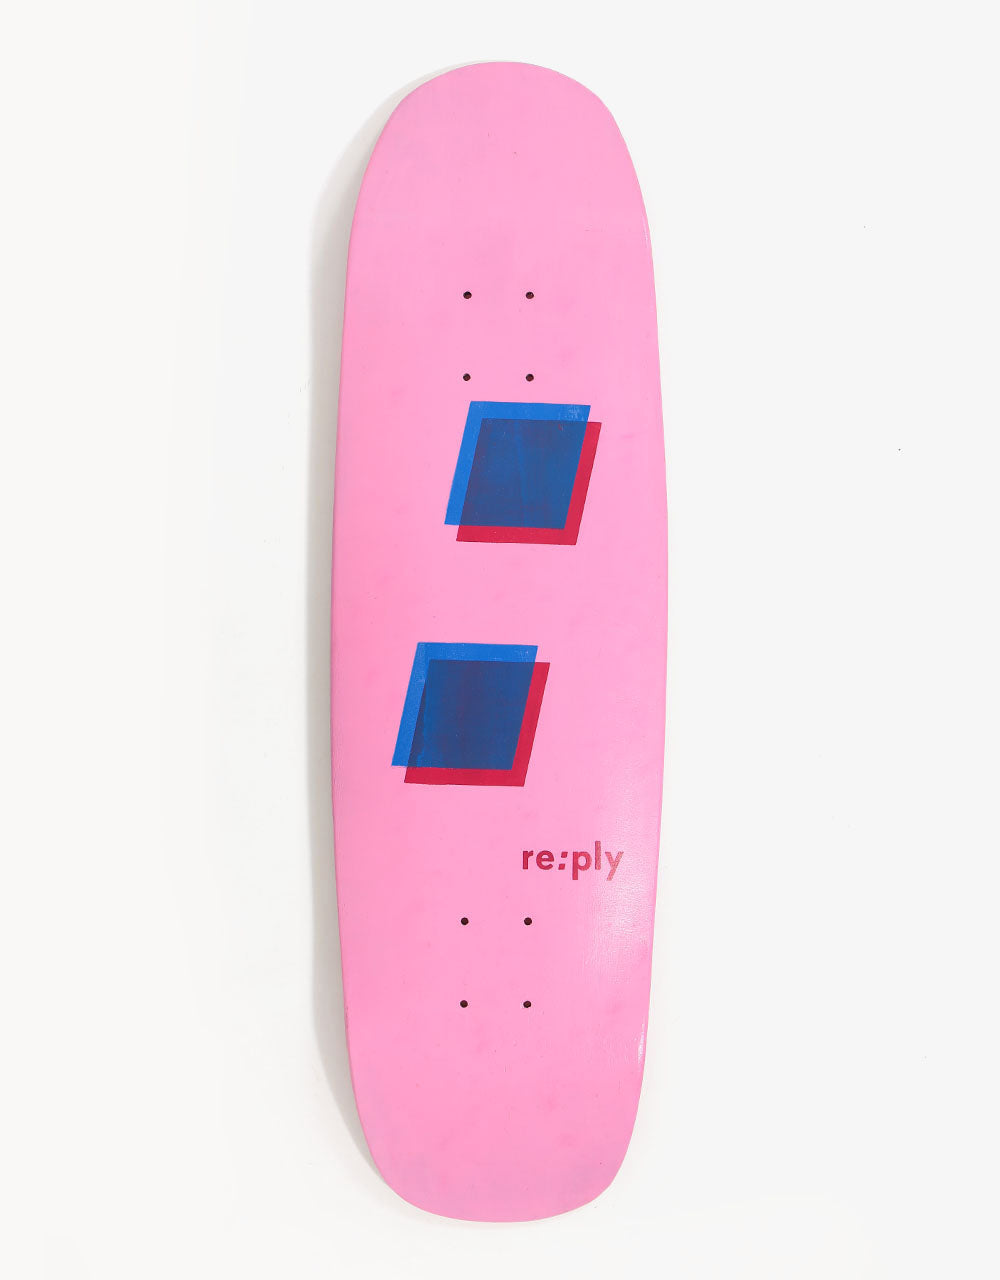 re:ply Tan Oak Skateboard Deck - 8.25" x 31"